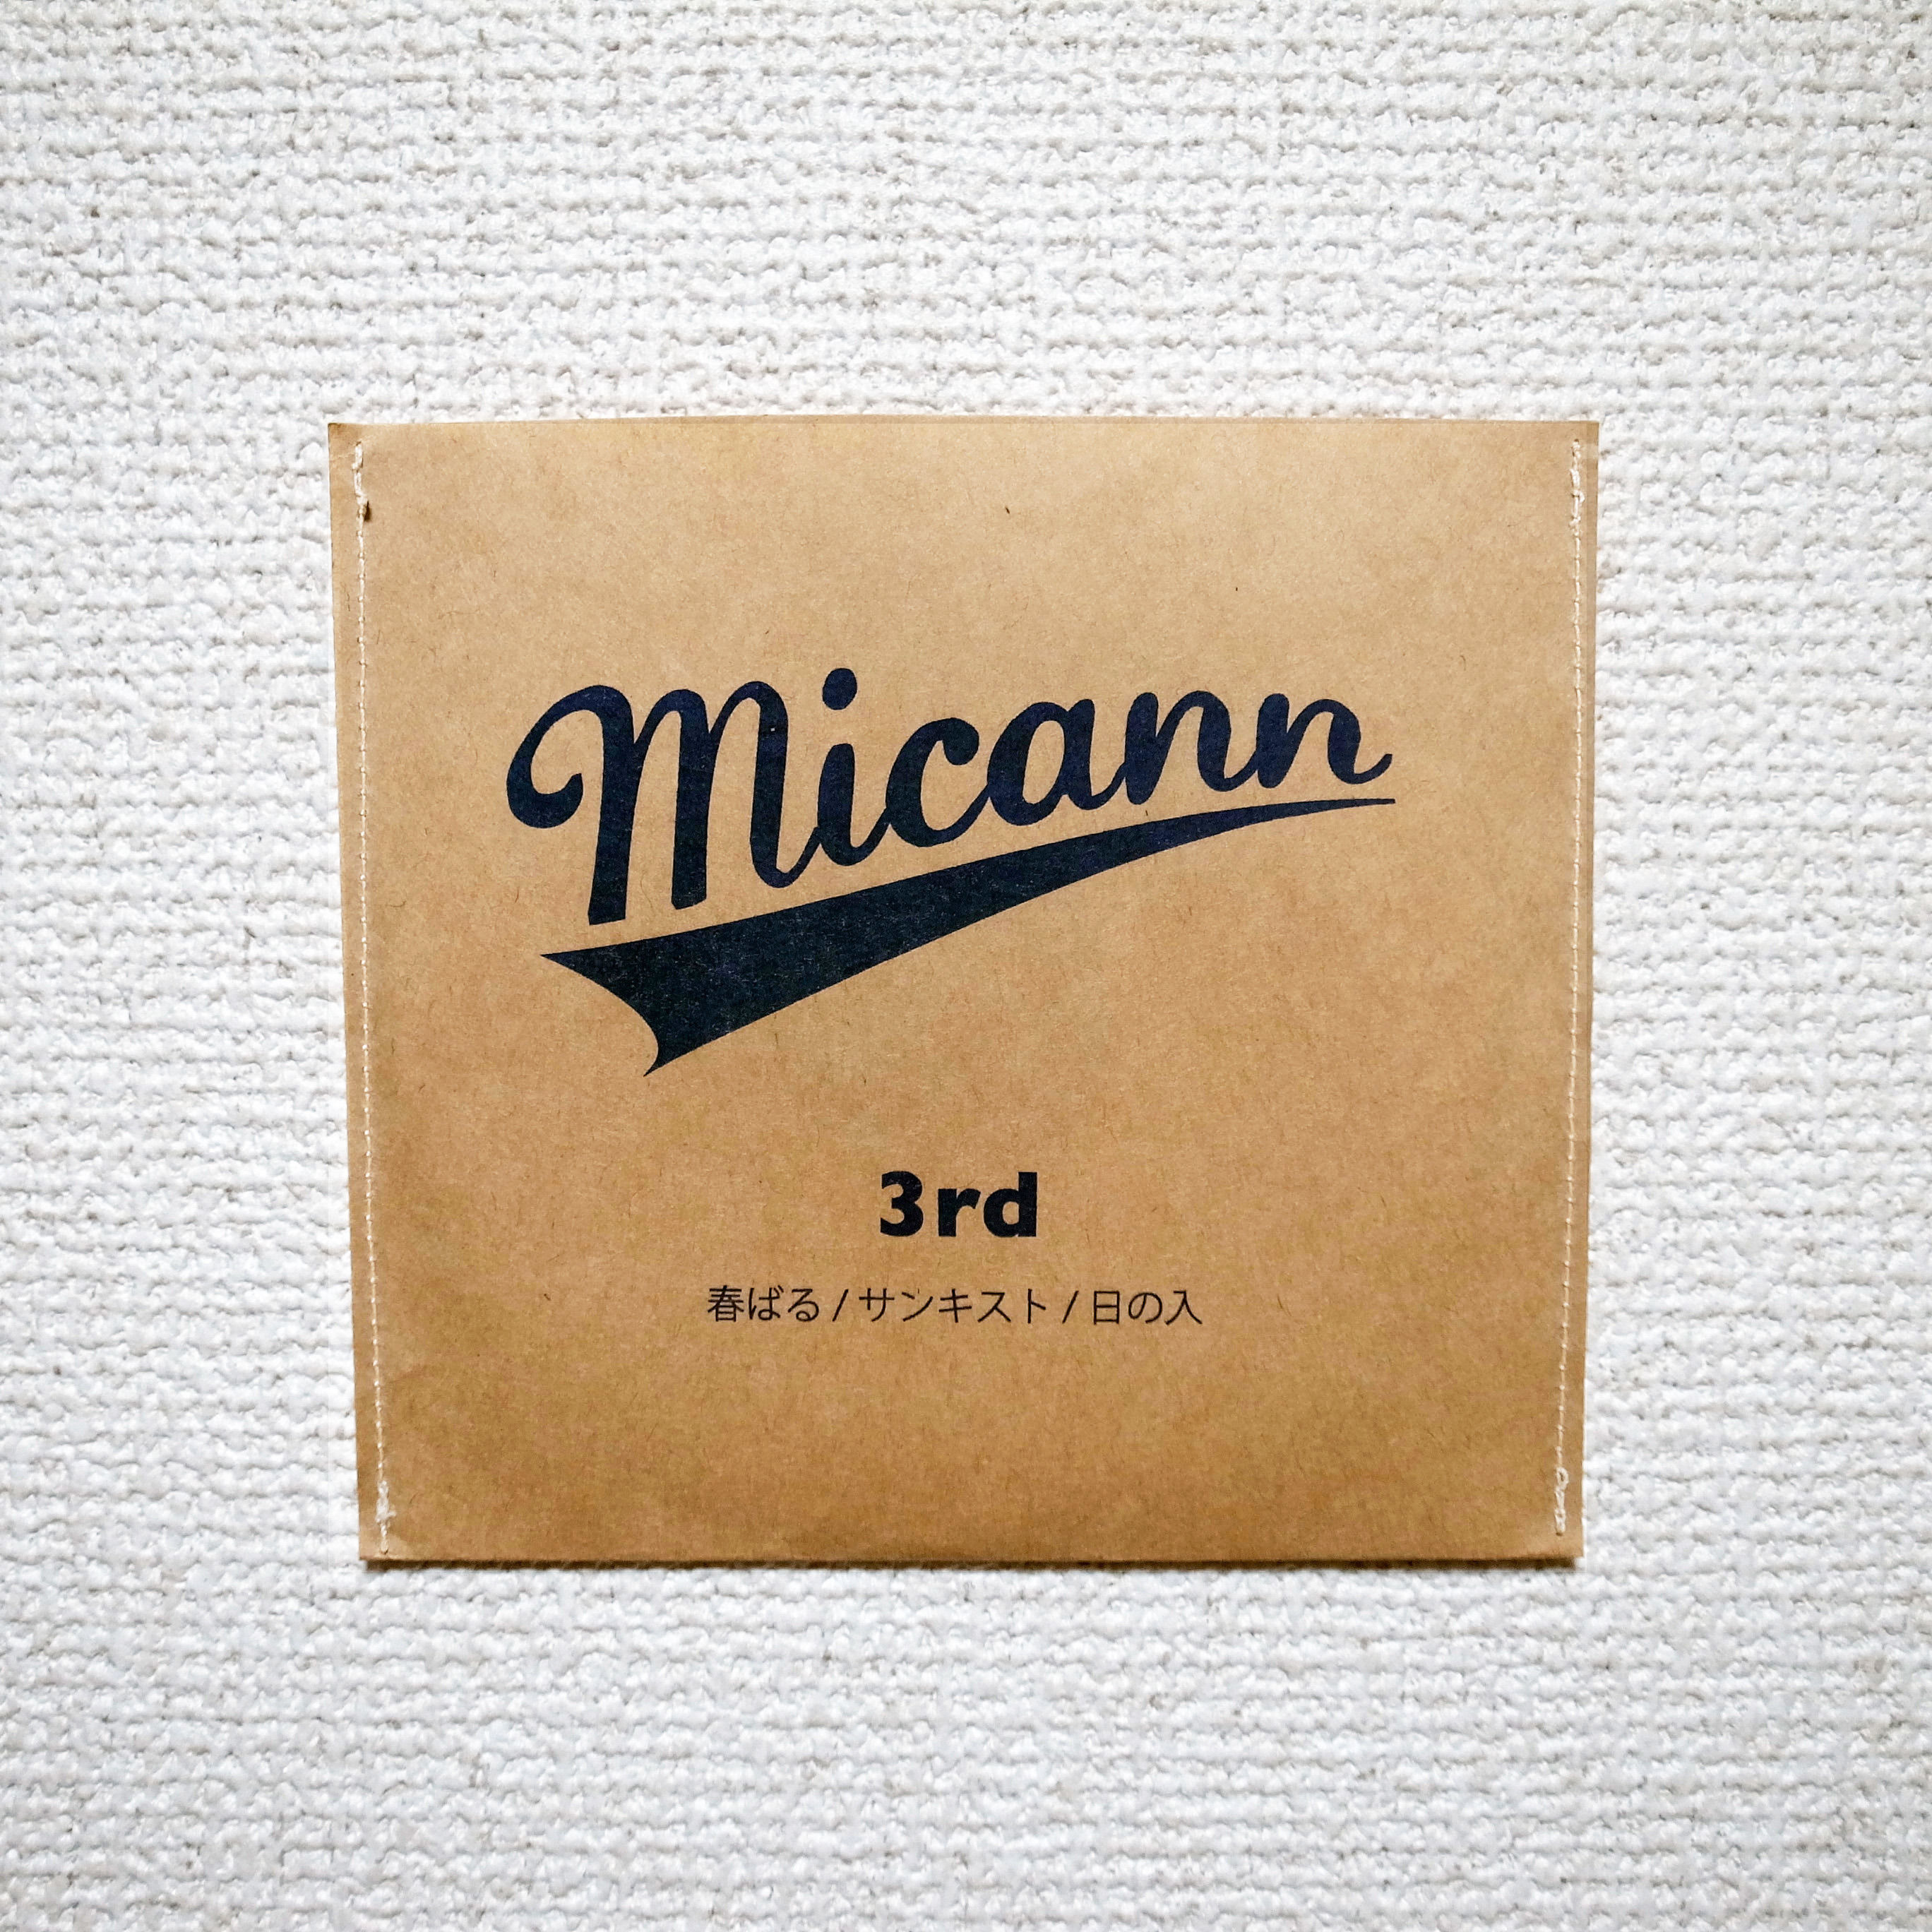 micann_3rd